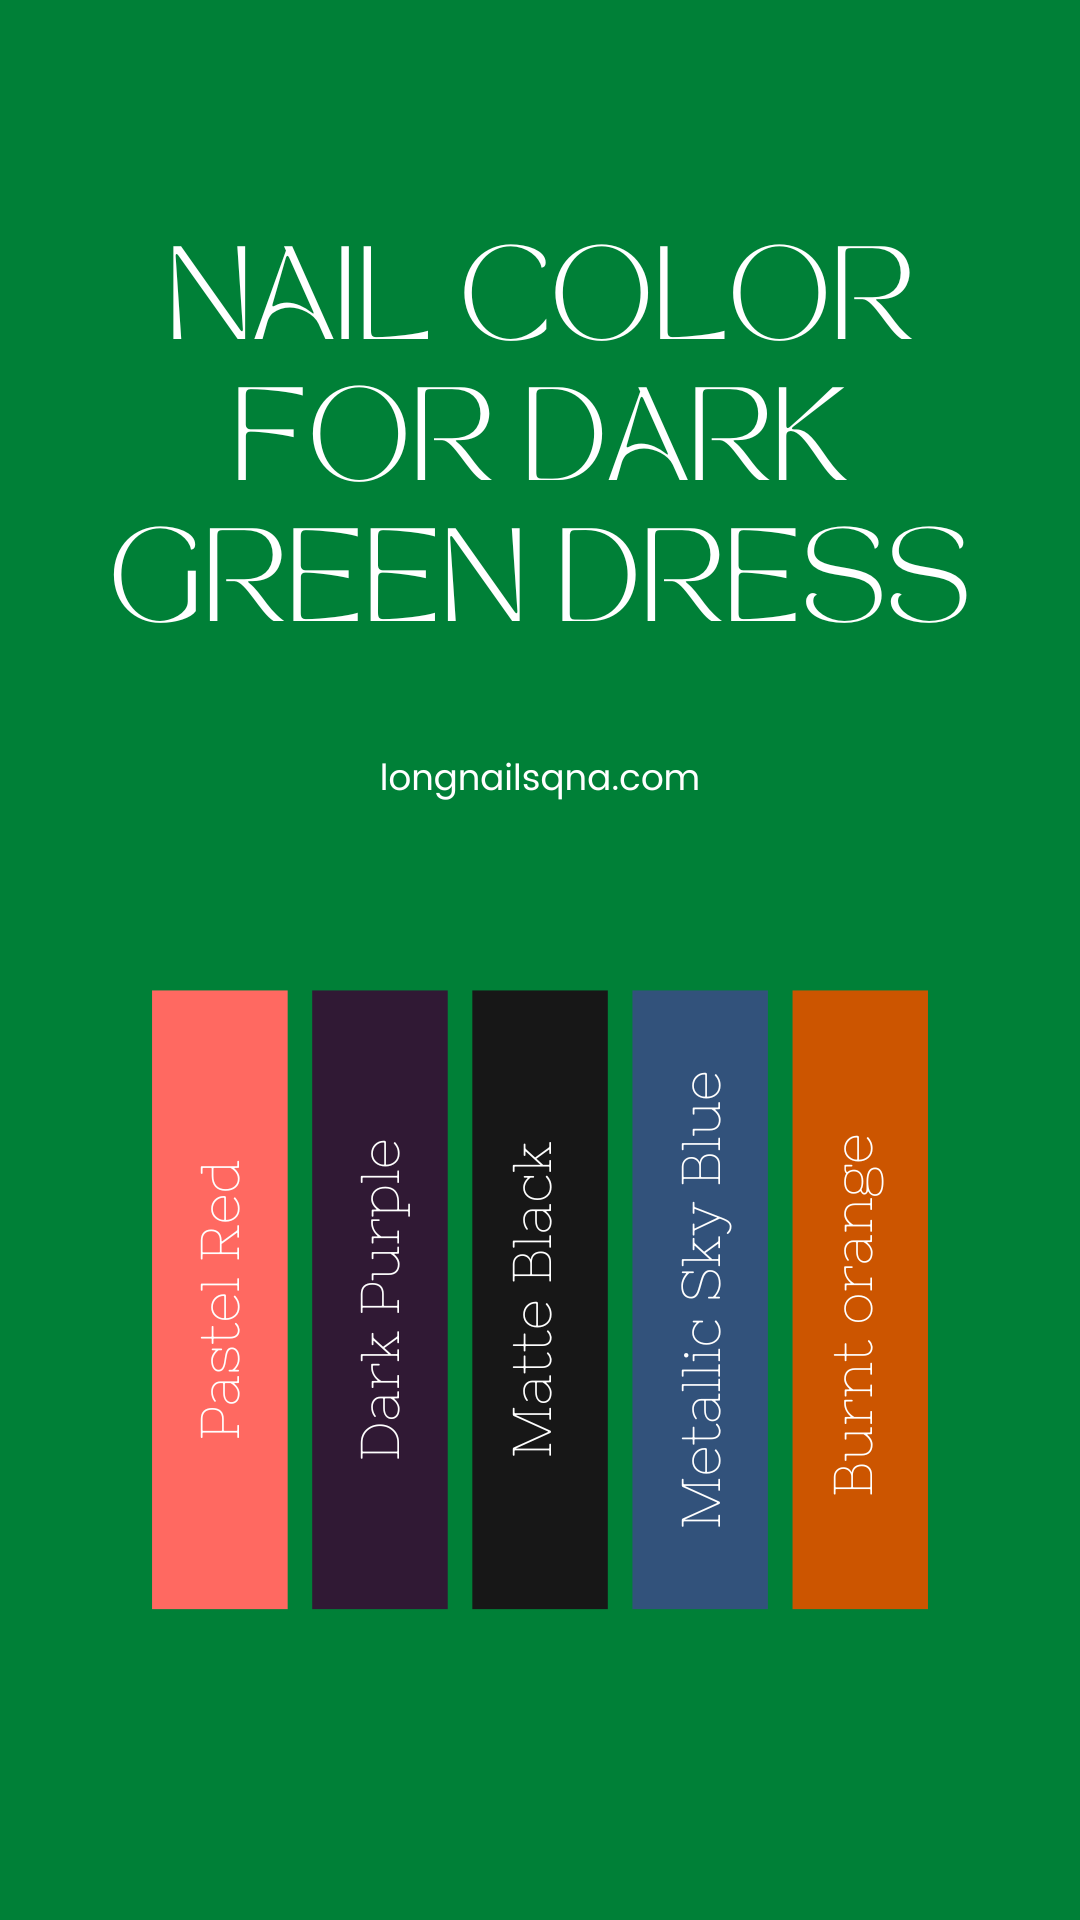 Nail Color for Dark Green Dress